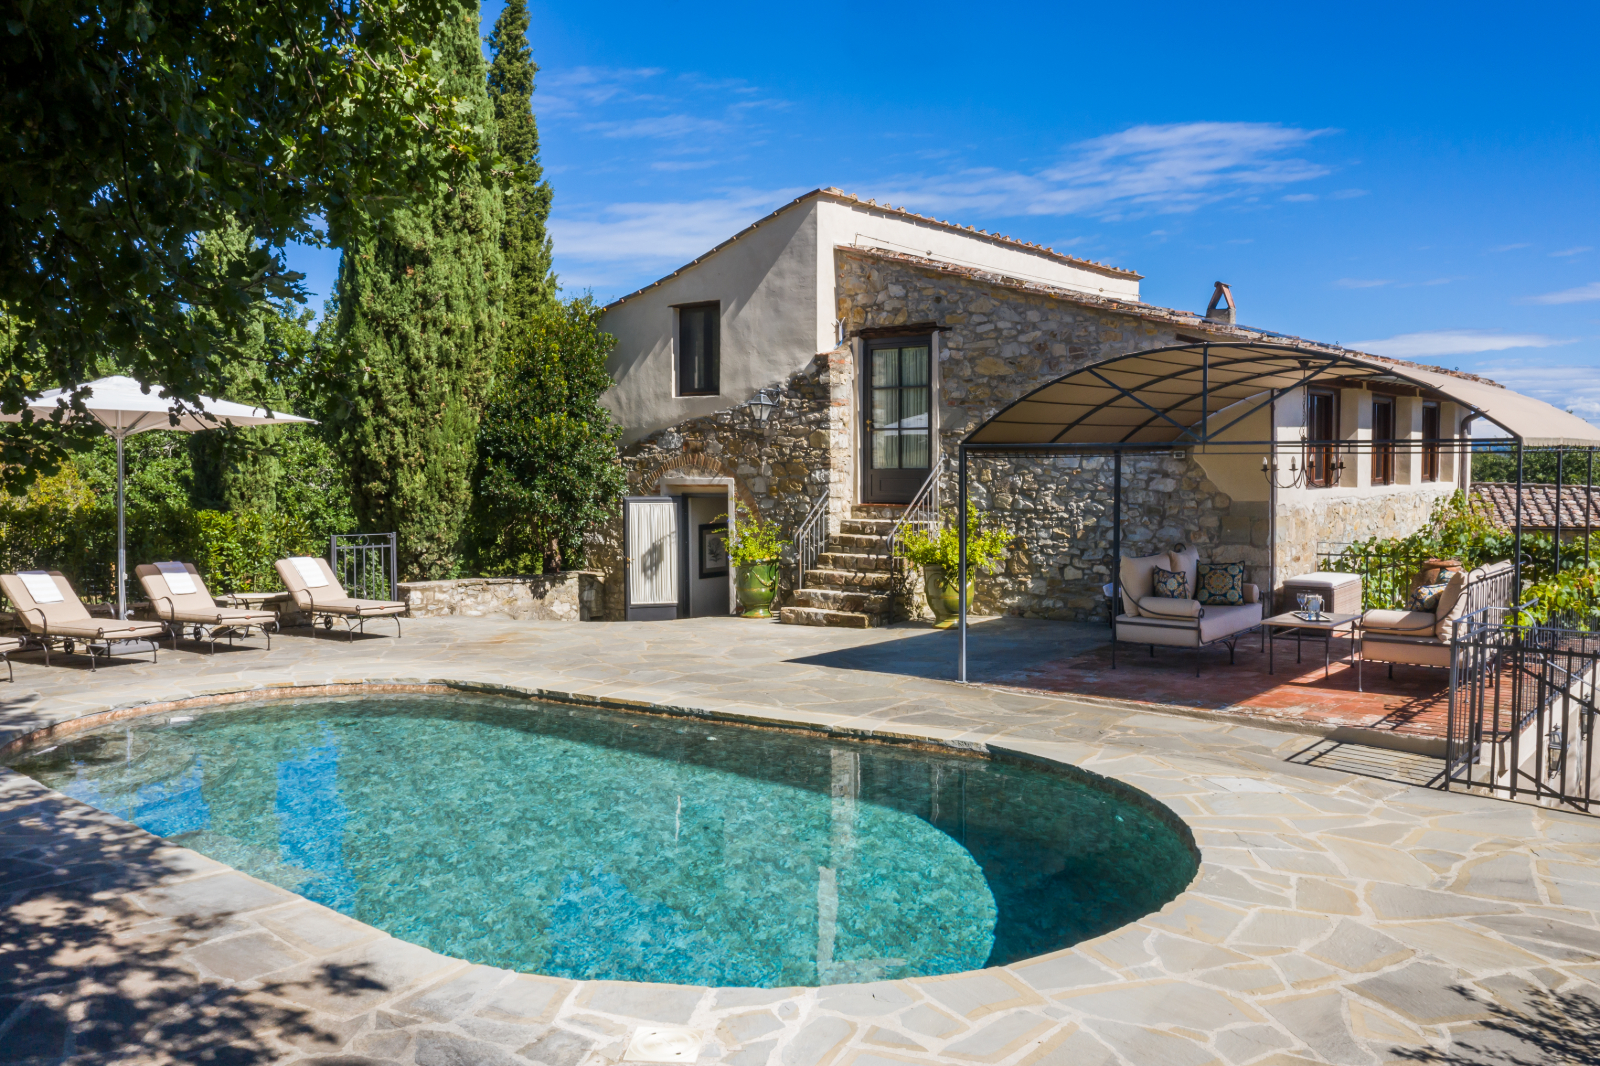 Pool with sun-loungers and exterior of villa at la tenuta, tuscany